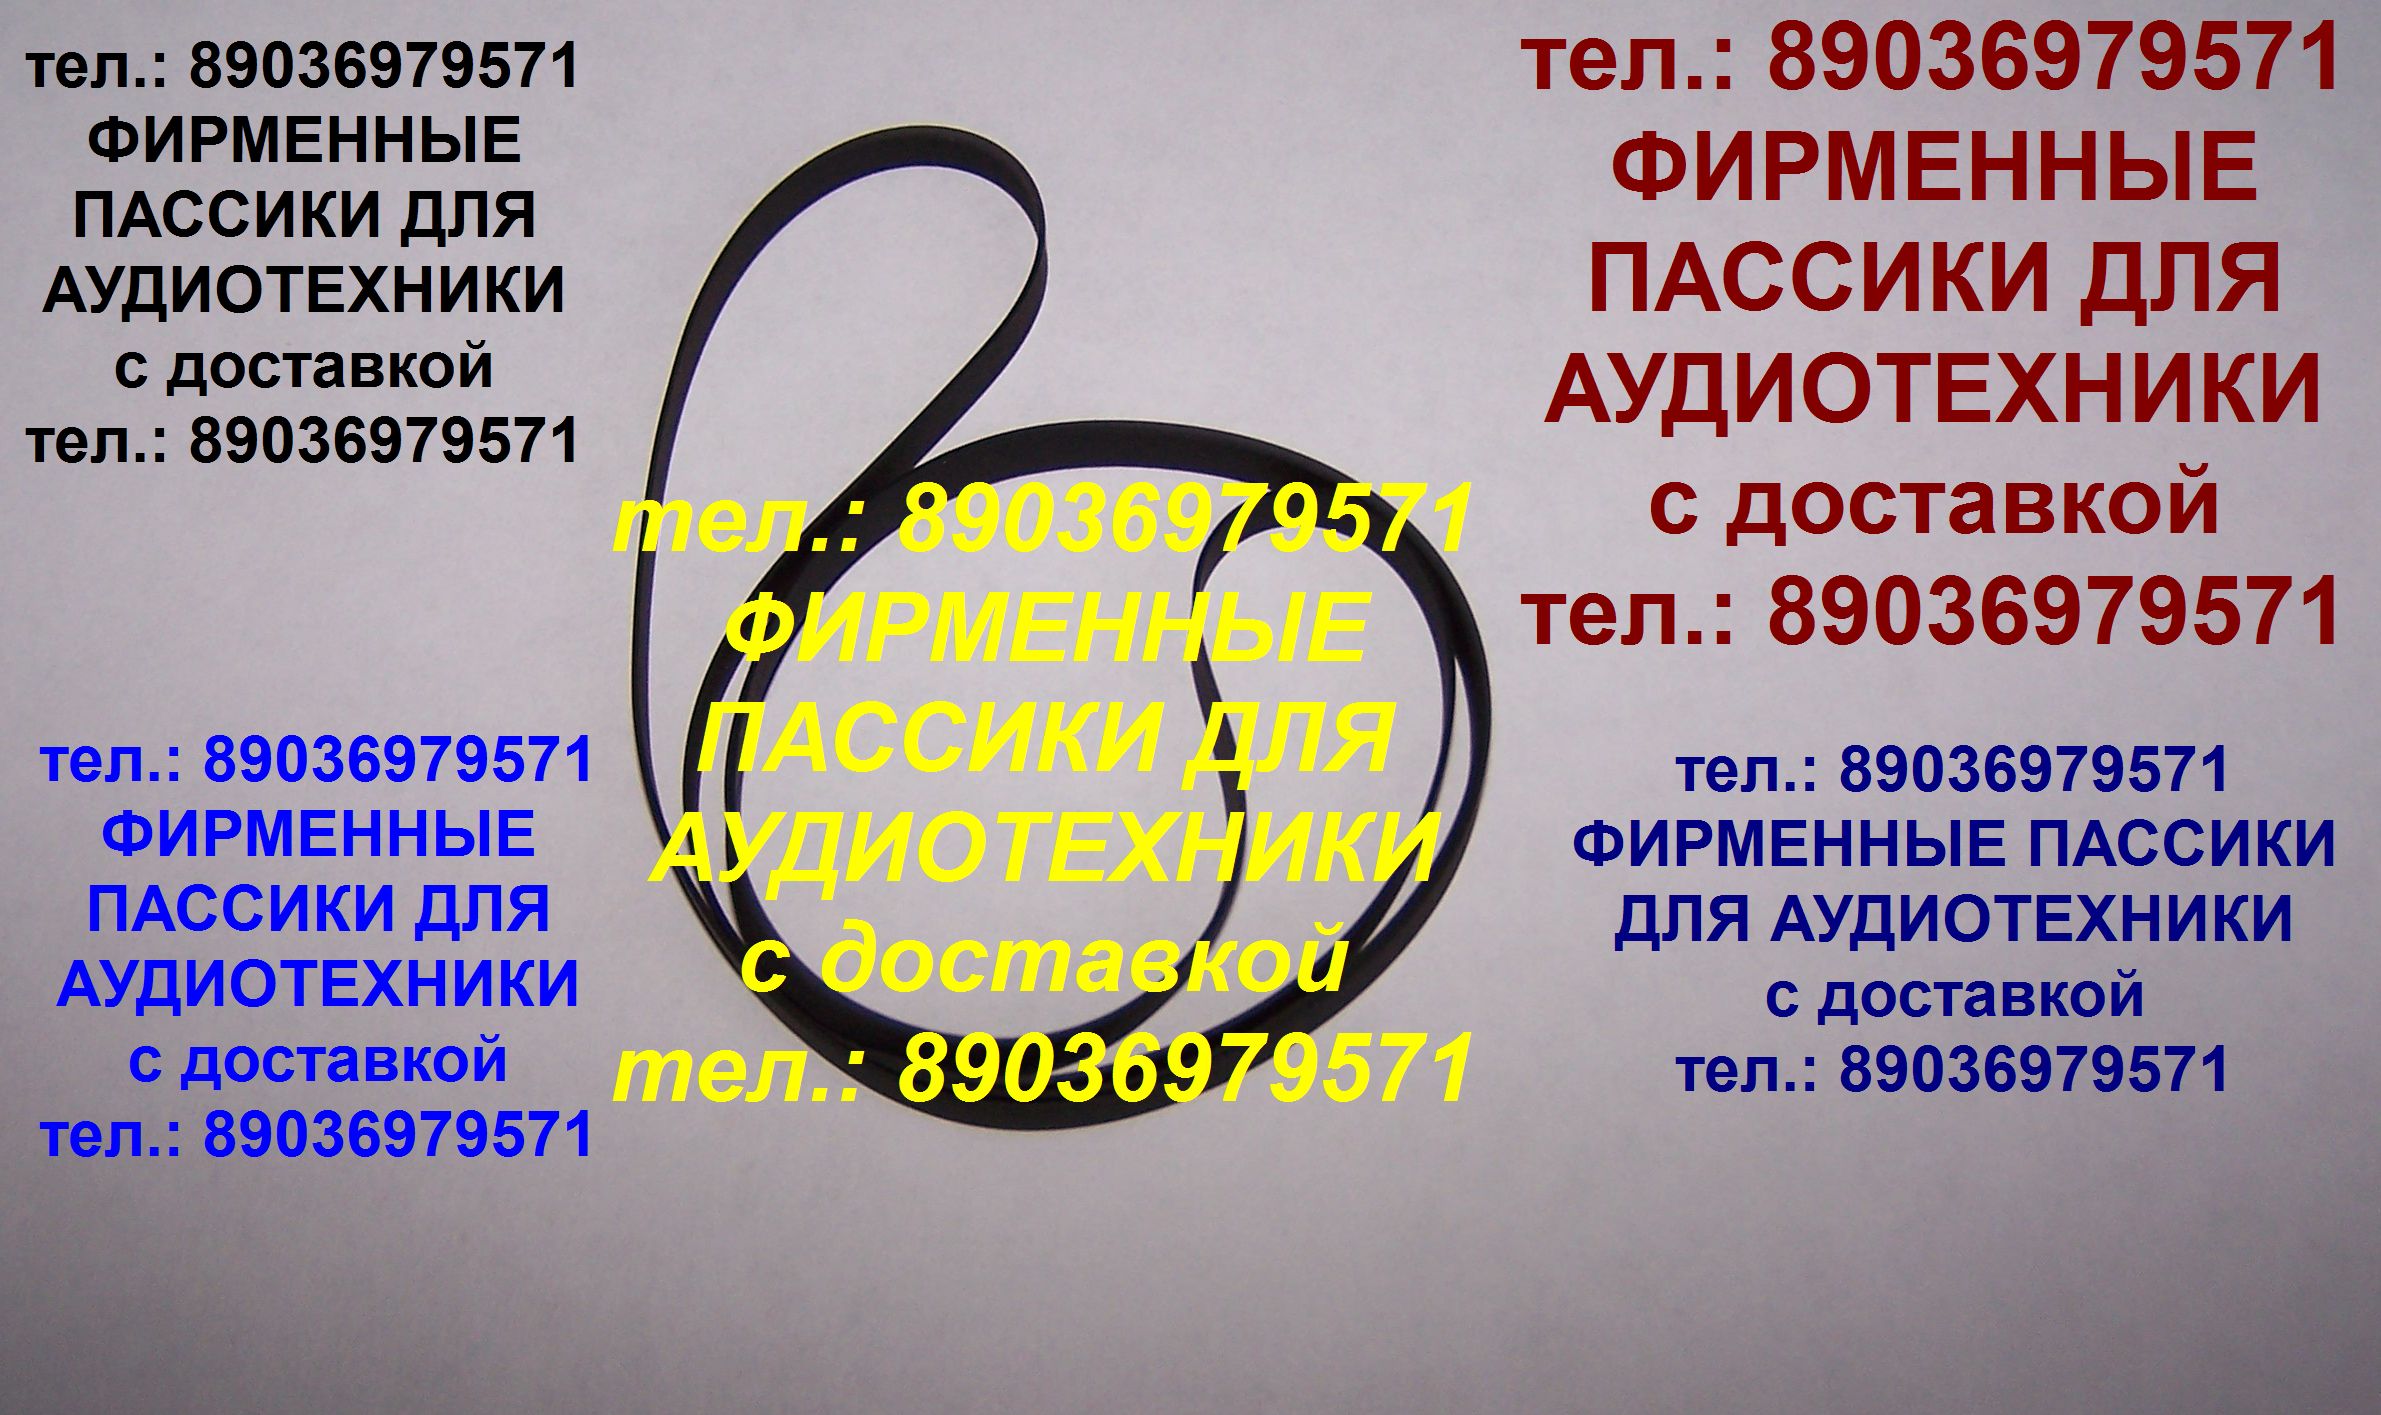 Пассики Вега 106 109 пассики Арктур 003 004  в городе Москва, фото 1, телефон продавца: +7 (903) 697-95-71